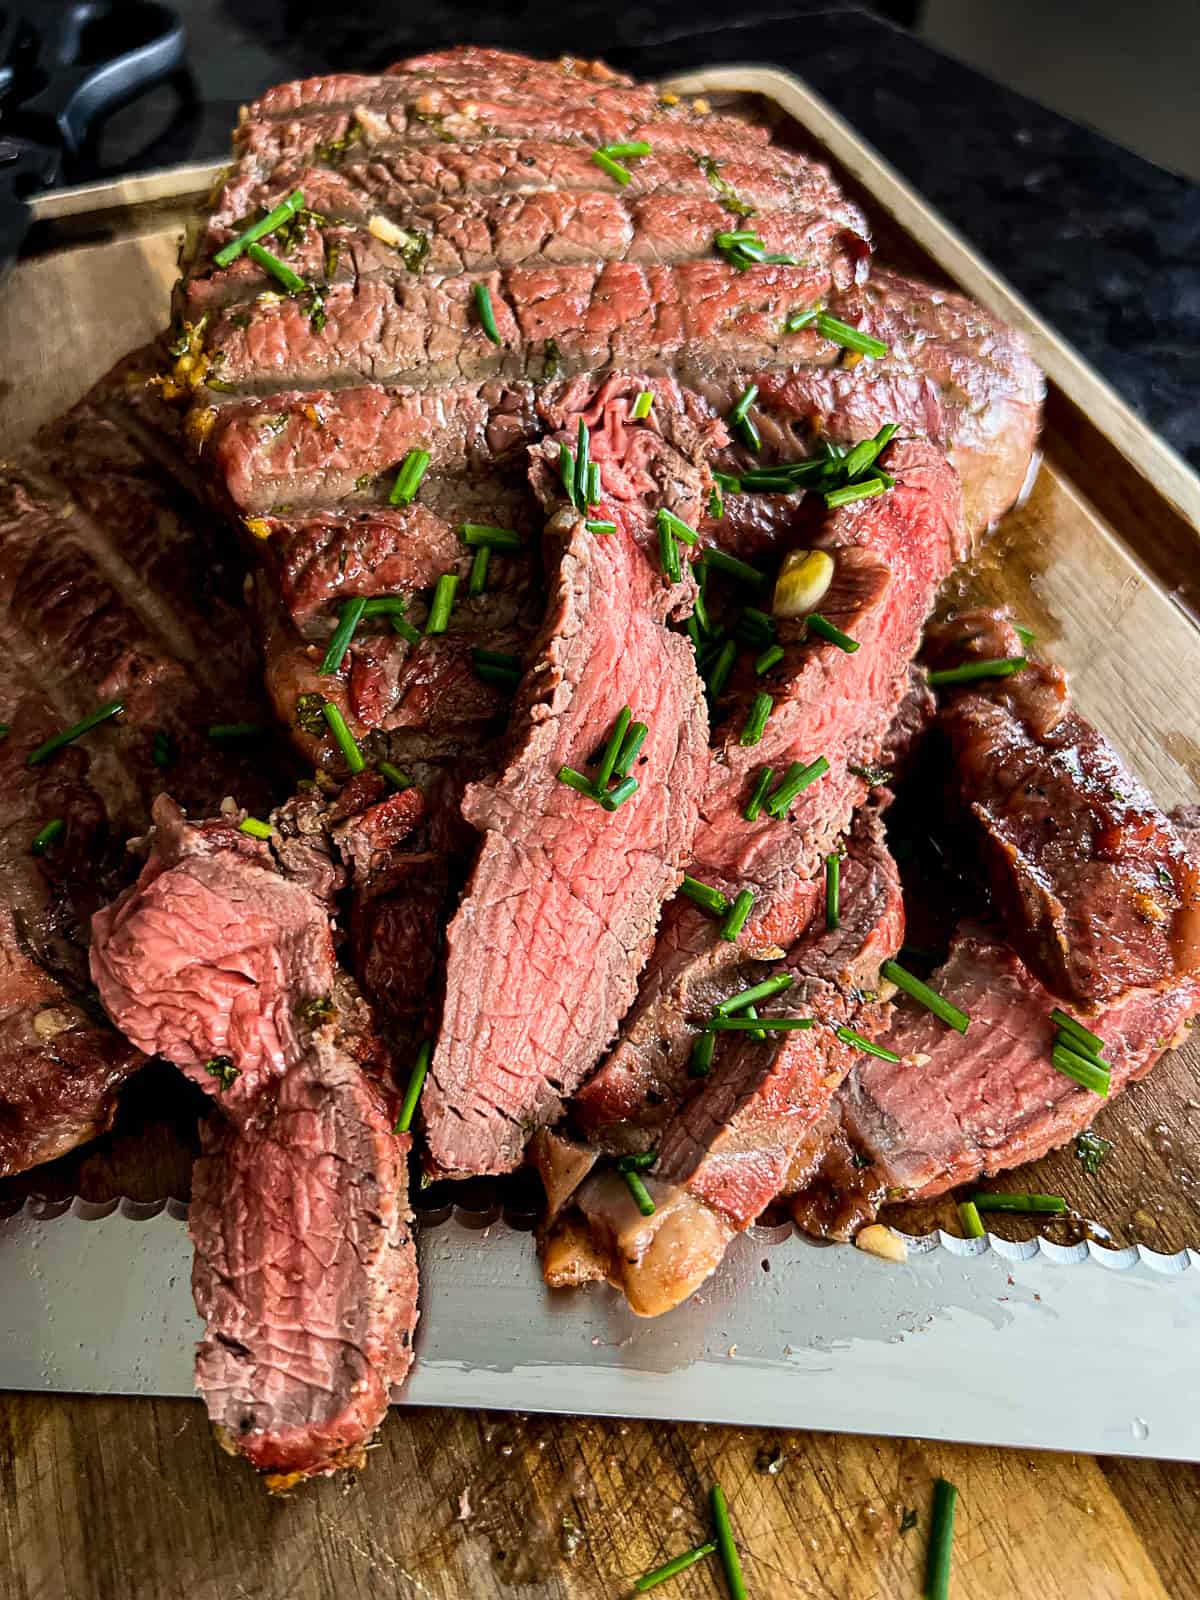 Medium Rare Traeger Smoked Sirloin Steak Sliced For Sandwiches on a Cutting Board